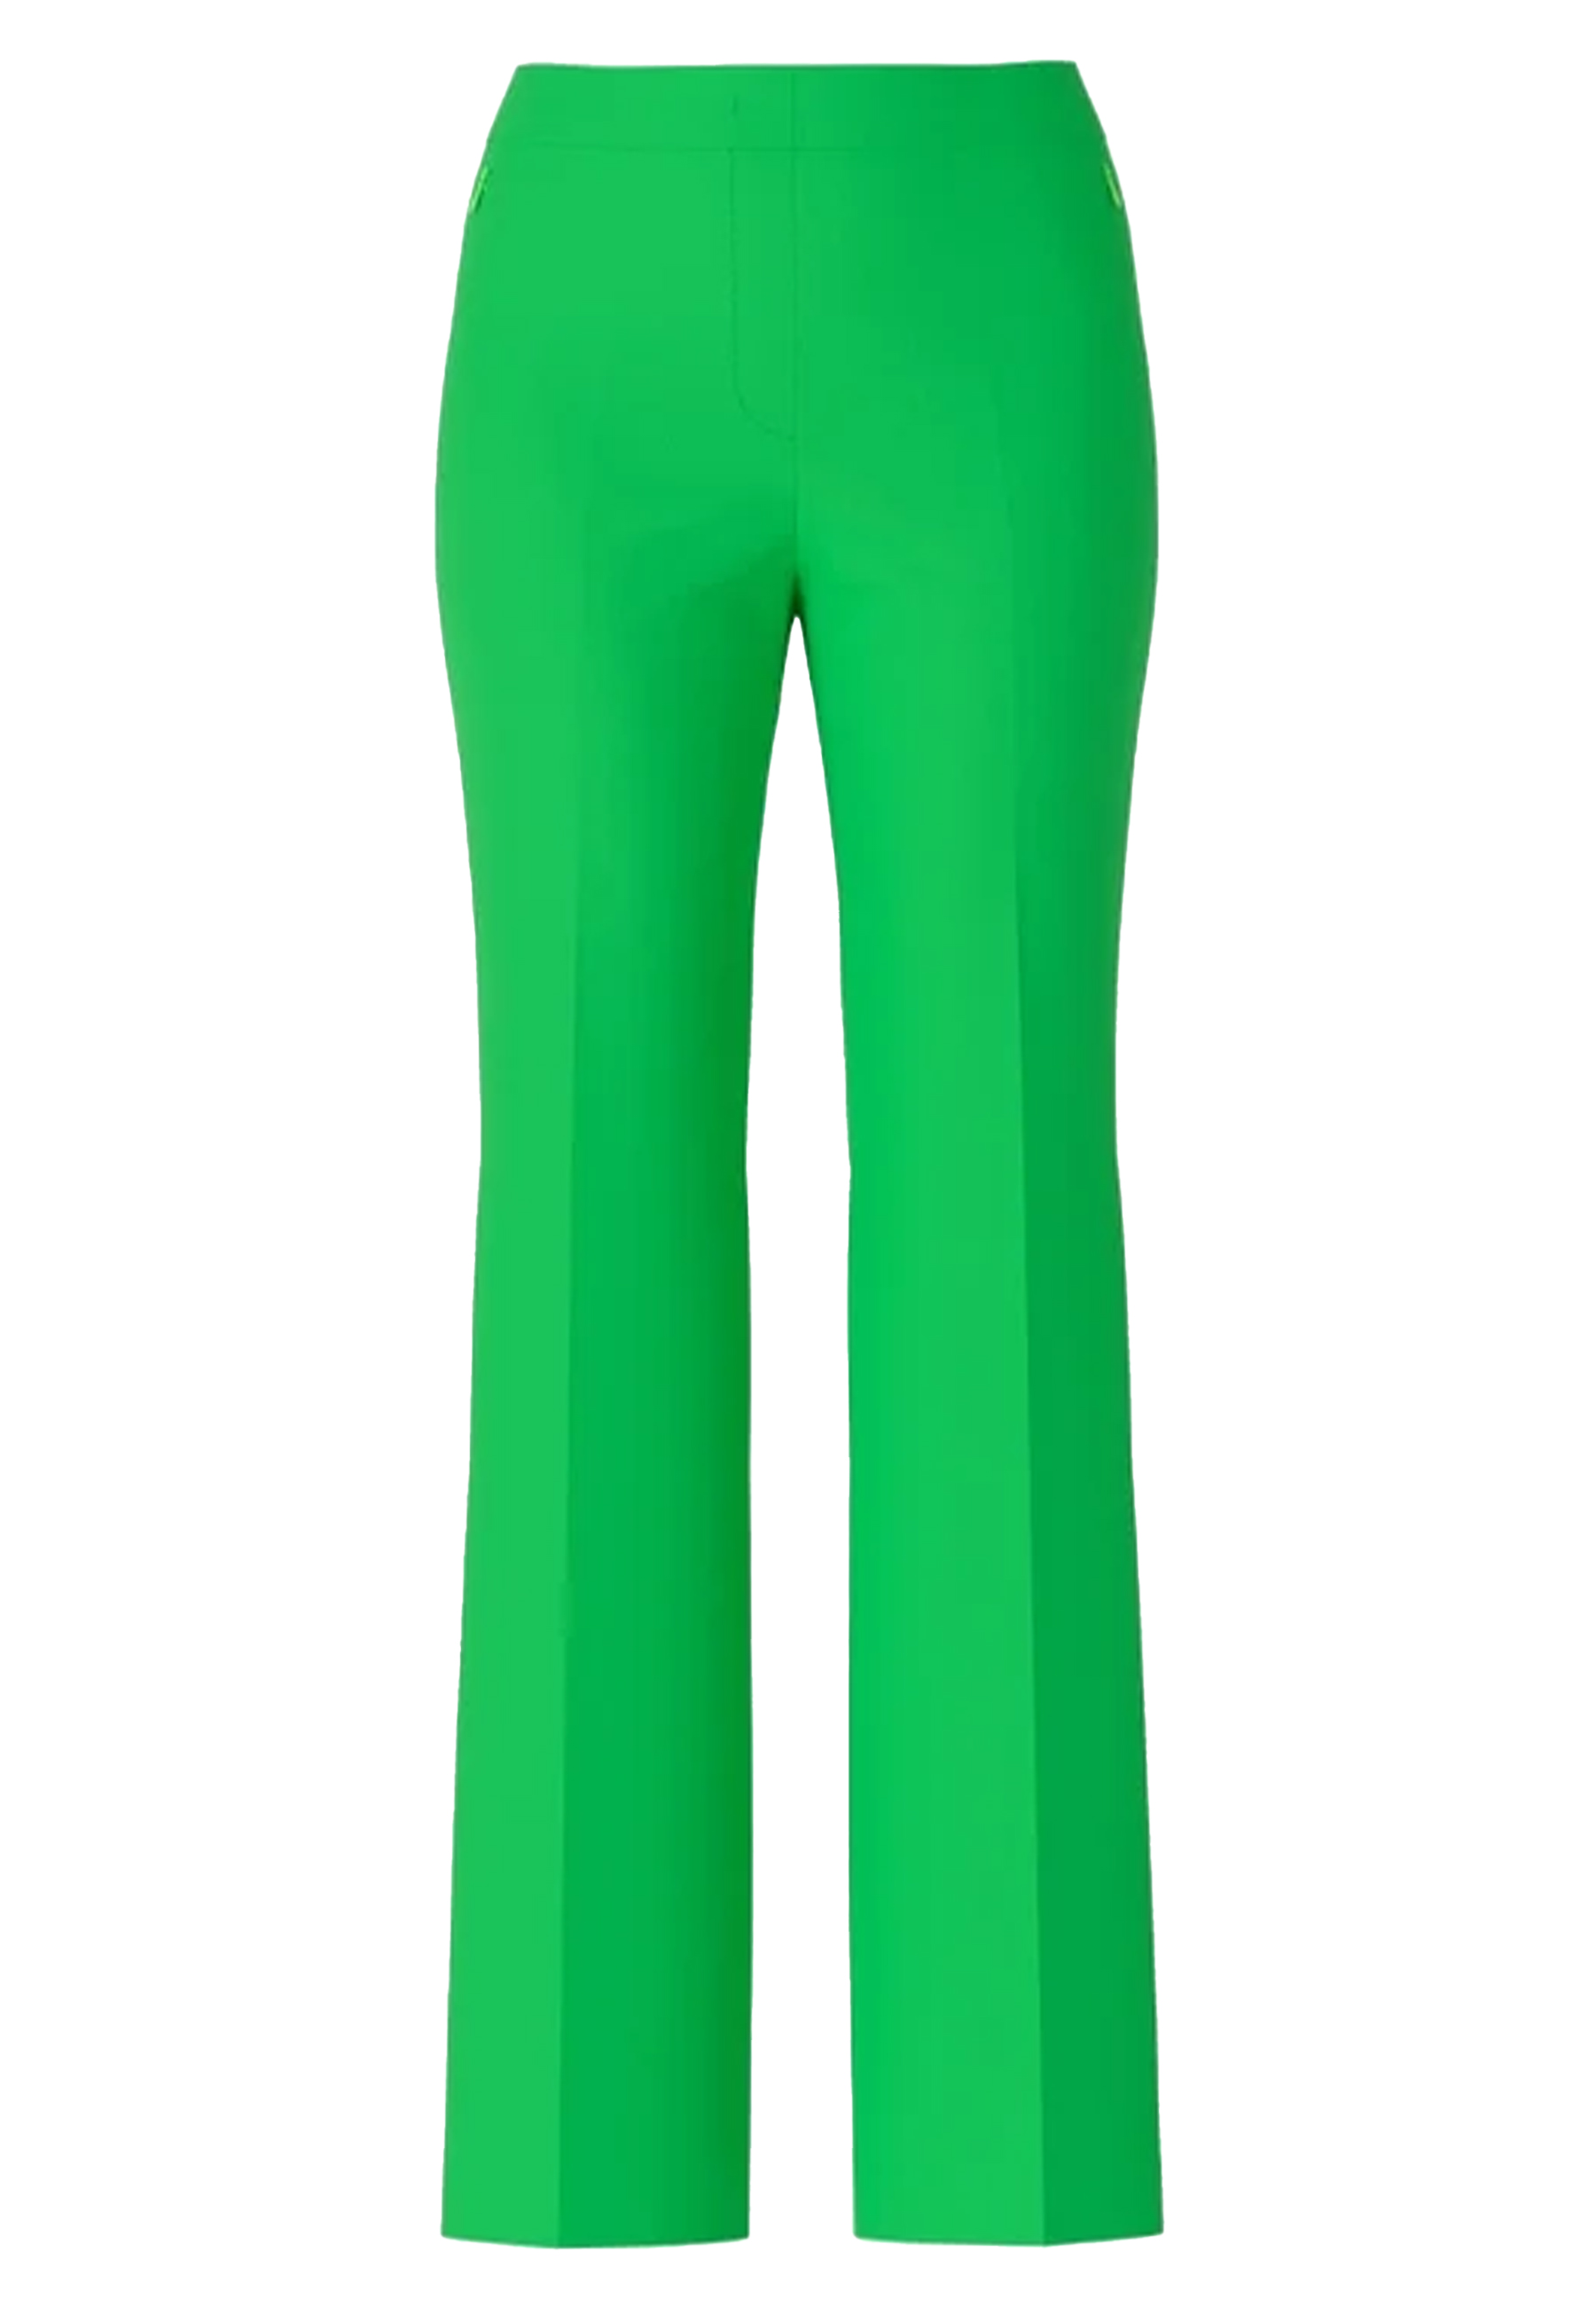 Marccain pantalons groen Dames maat 44